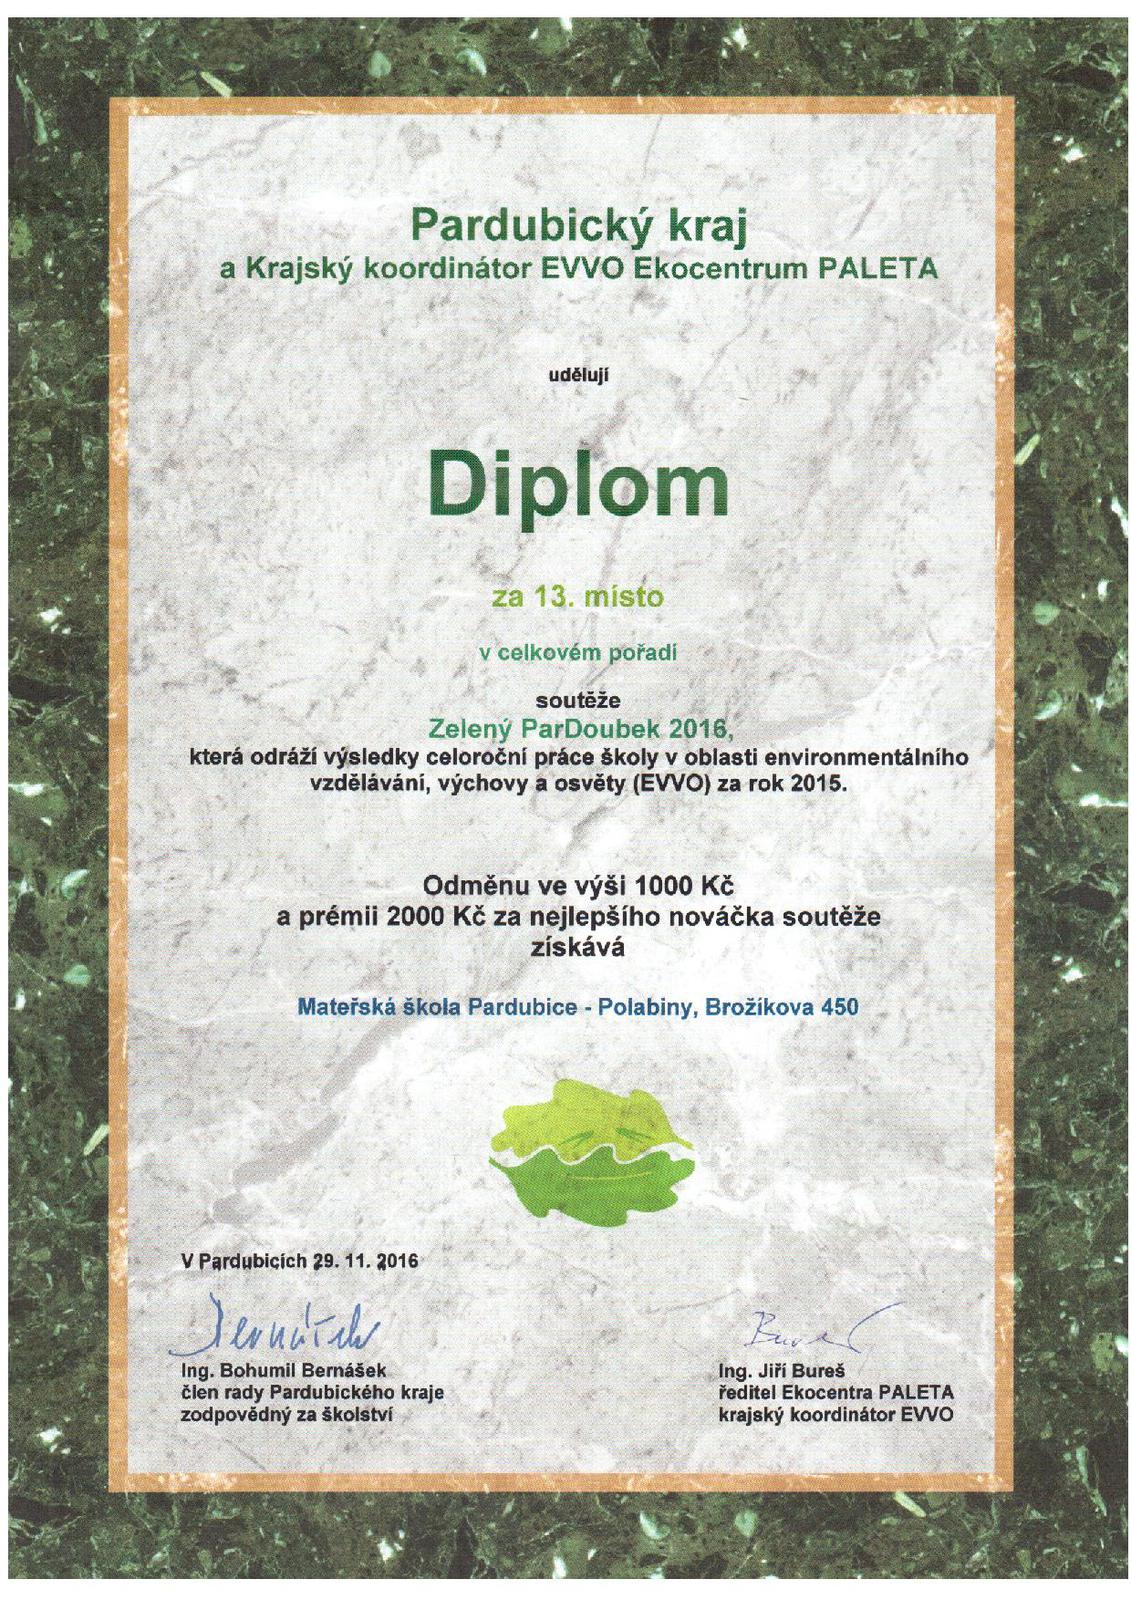 PARDOUBEK-Diplom